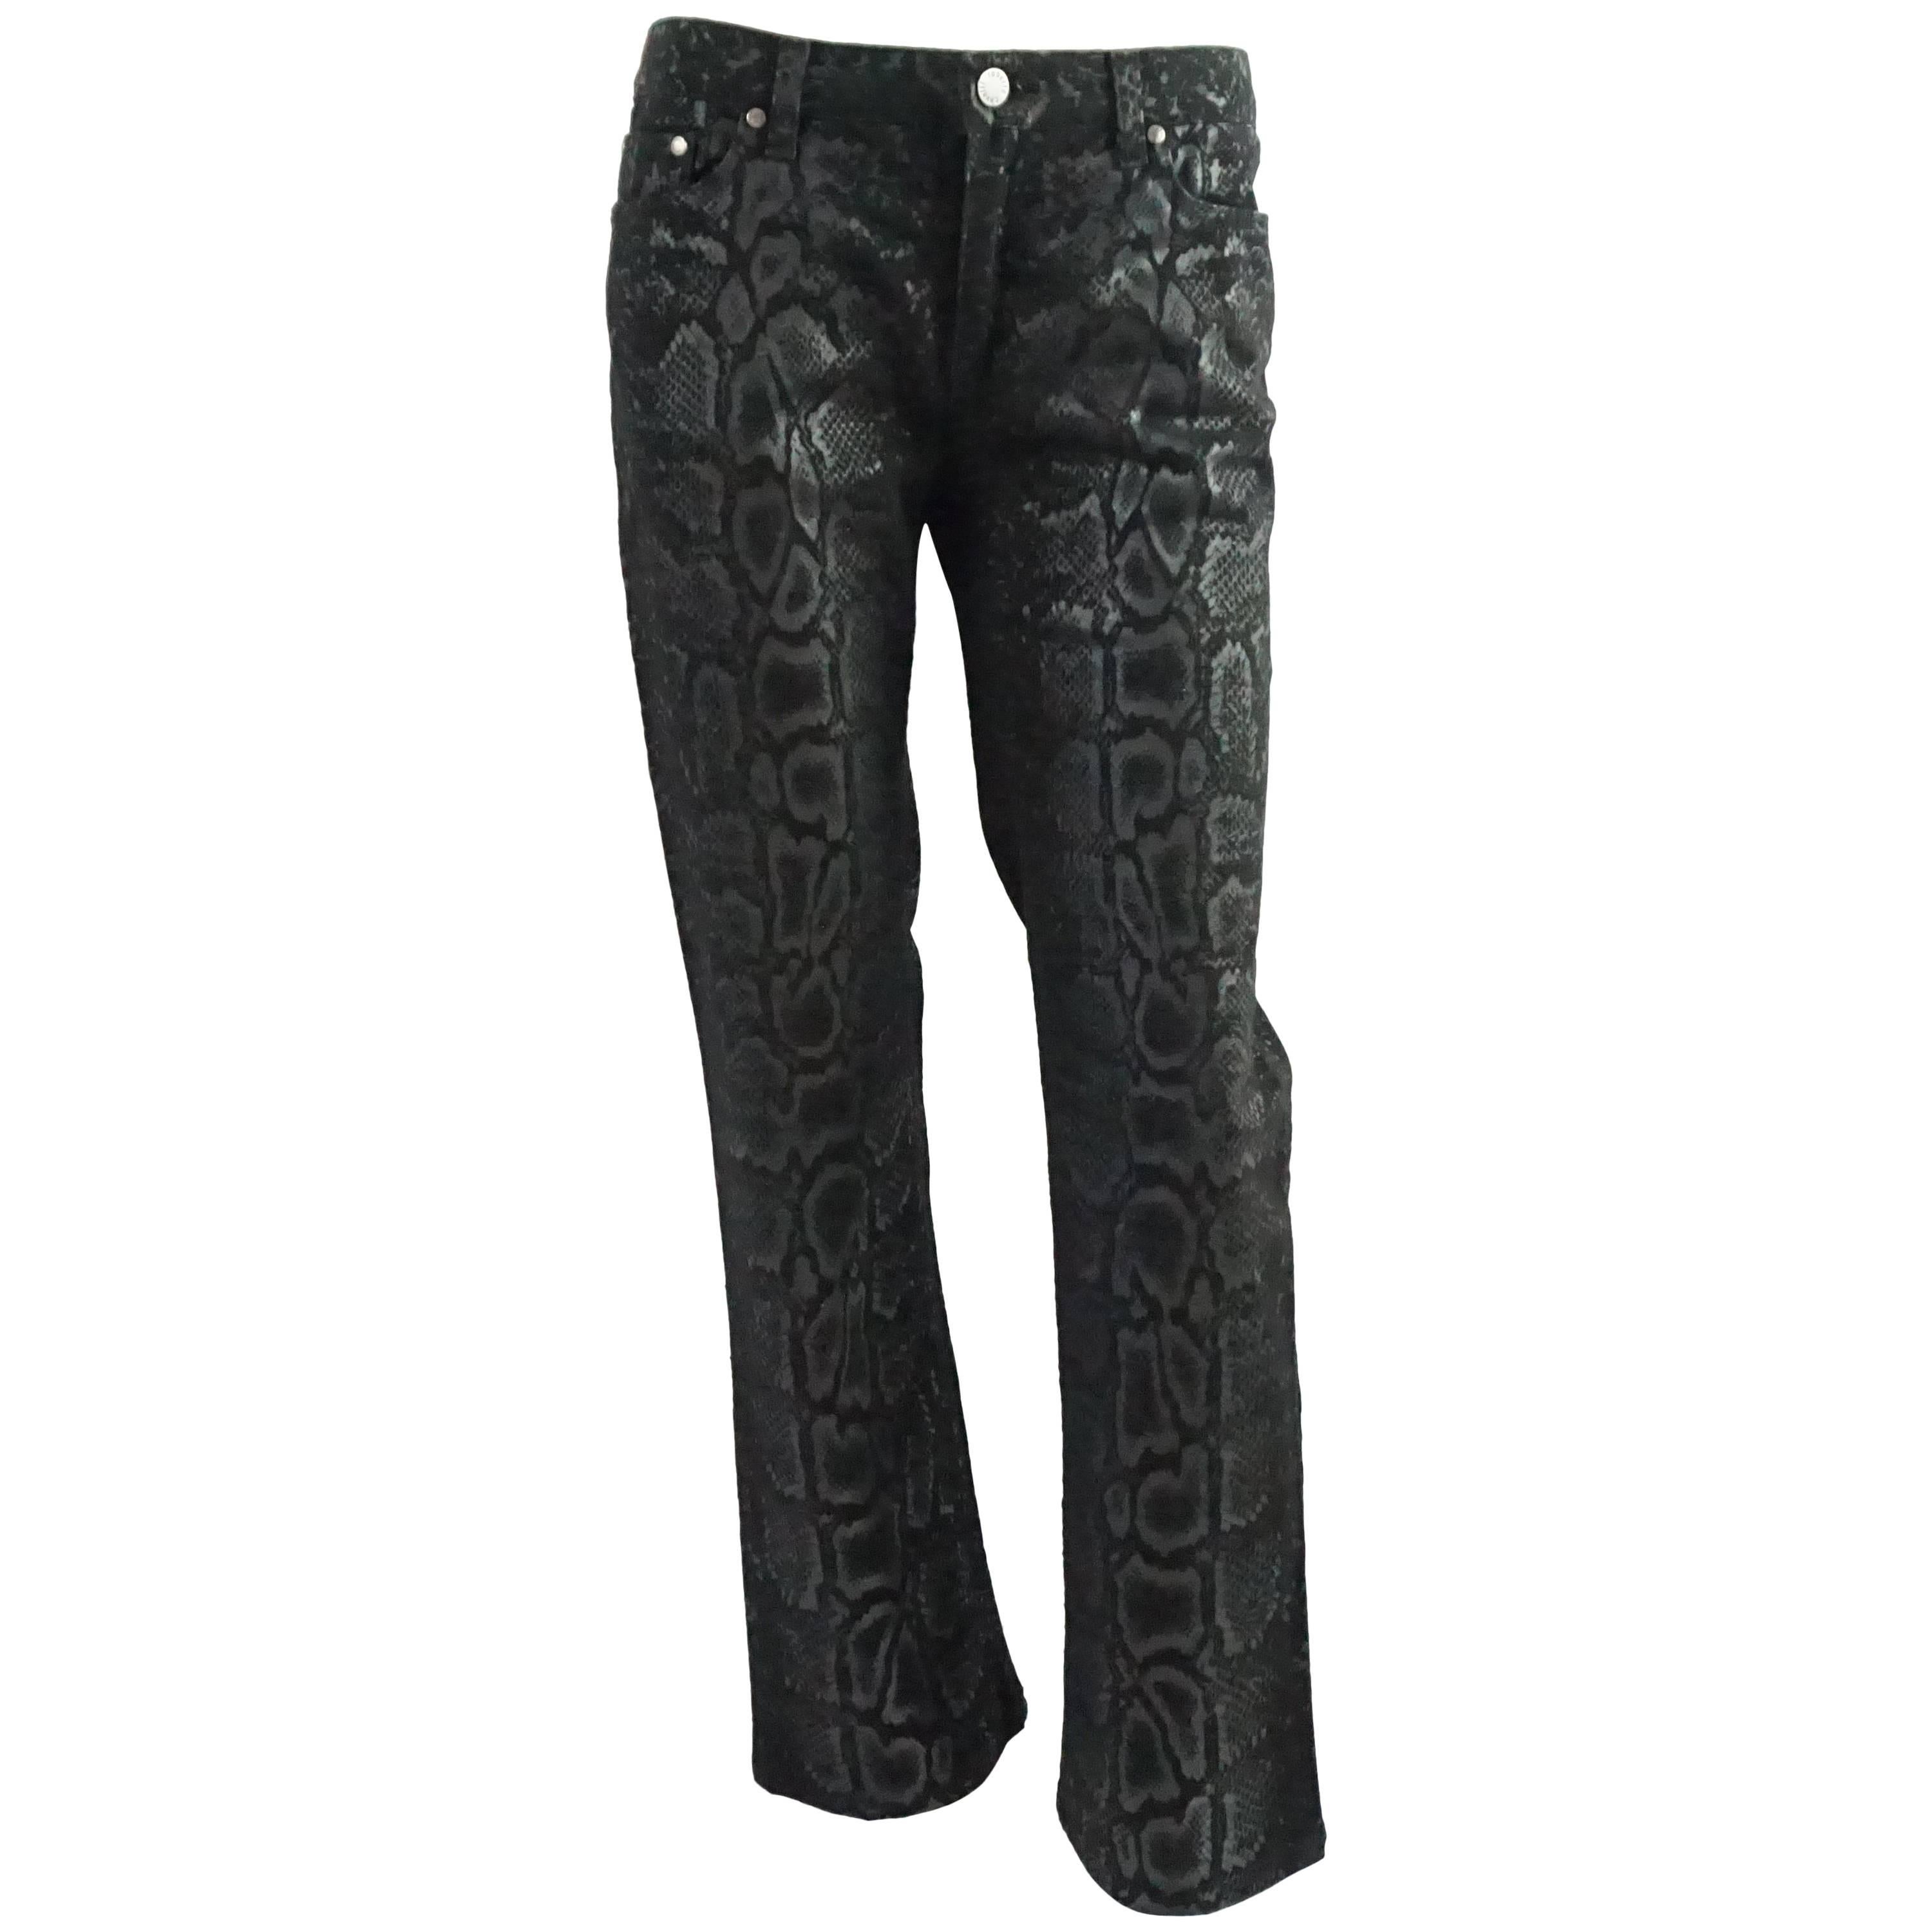 Roberto Cavalli Black Jeans with Snake Print - S - NWT